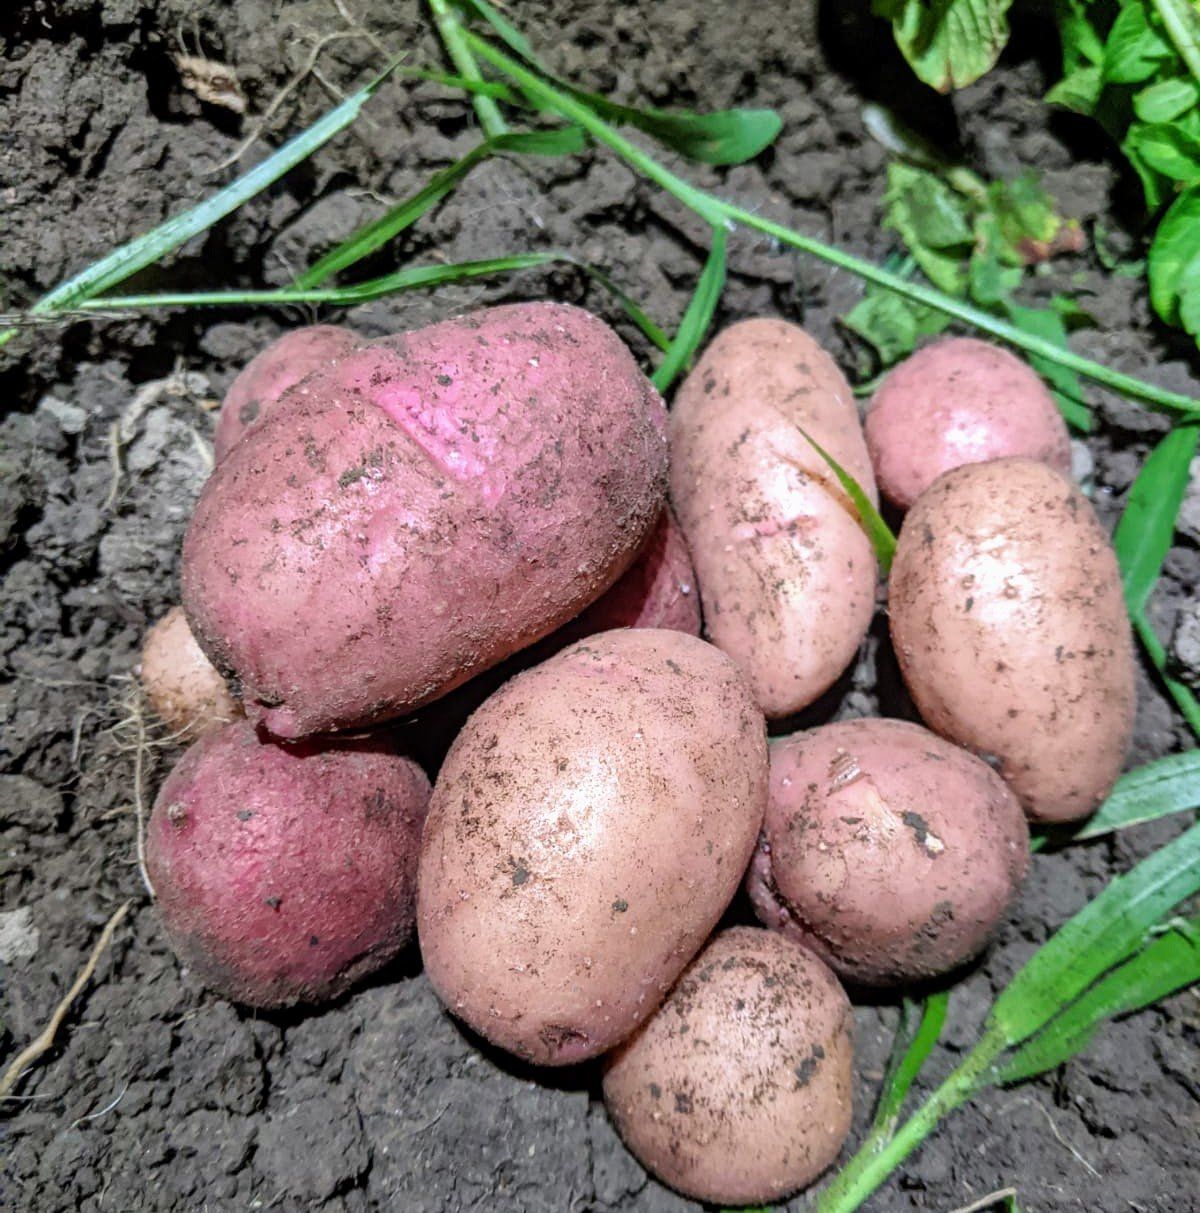 Next Happening: Farm Share Week 13 - Potatoes!